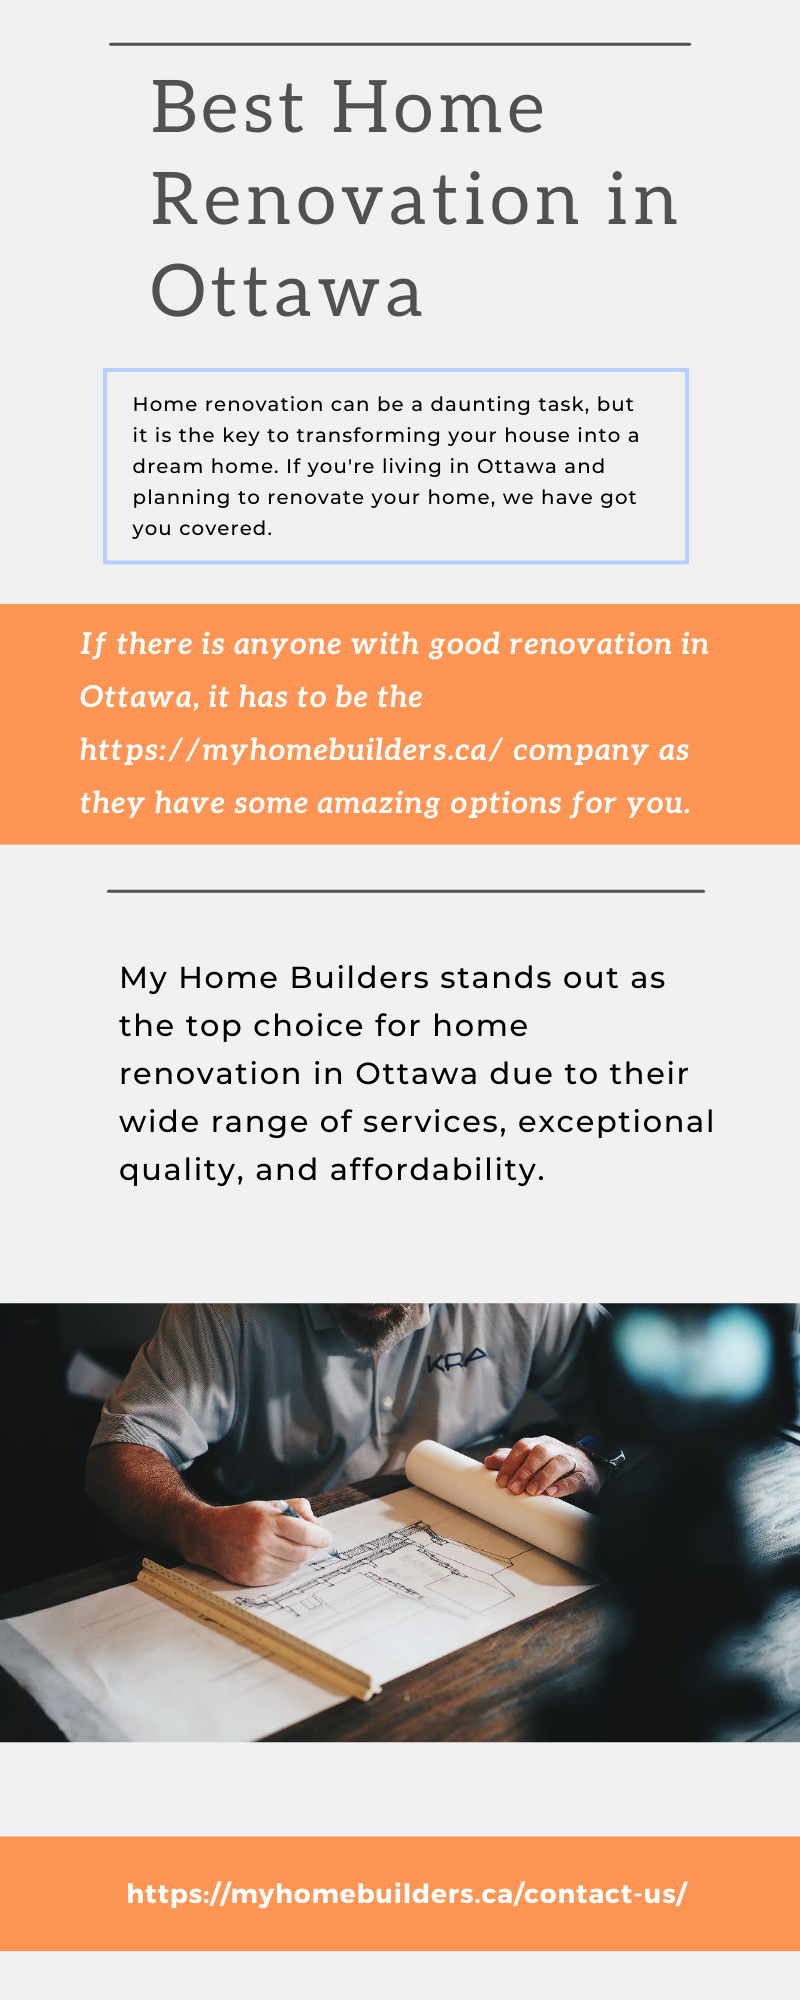 Best Home Renovation in Ottawa - Myhomebuilders.ca